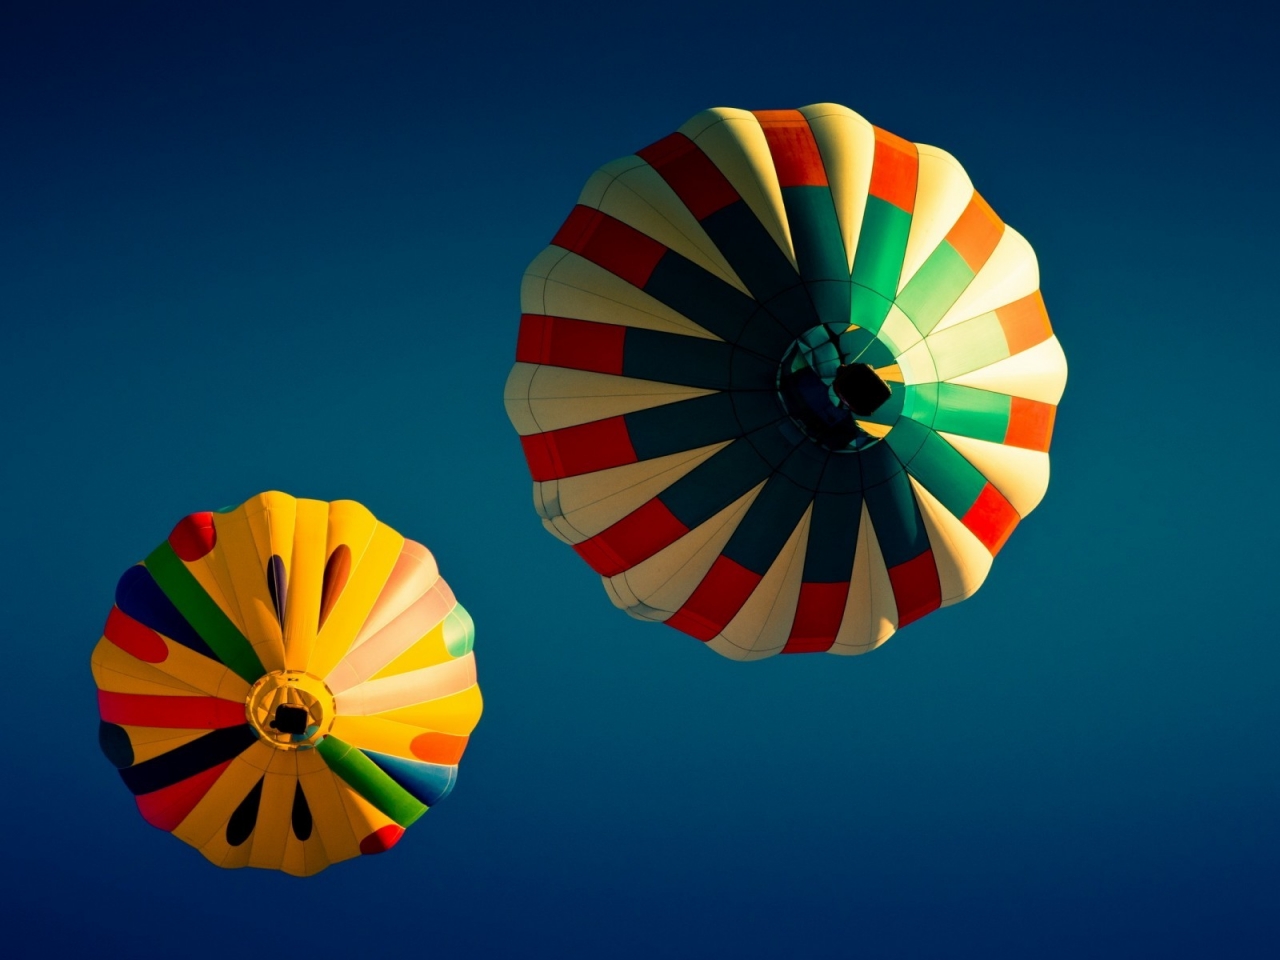 Hot Air Balloon Ride for 1280 x 960 resolution